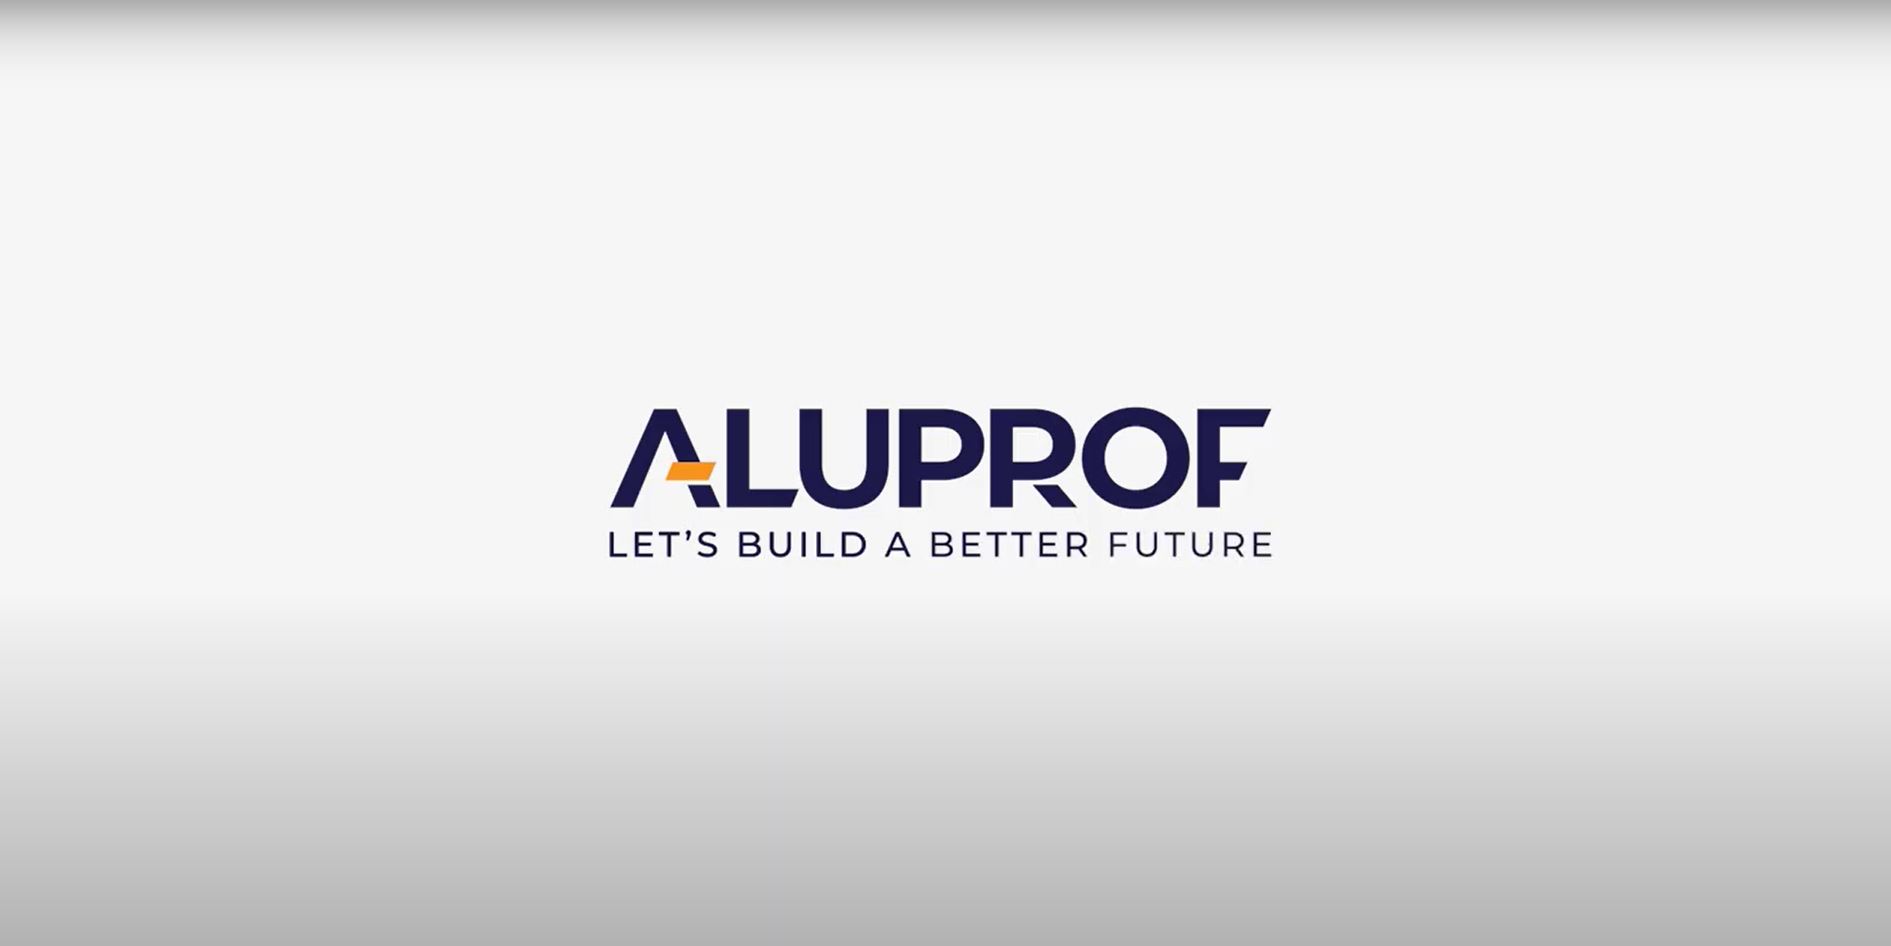 Aluprof - Let's build a better future